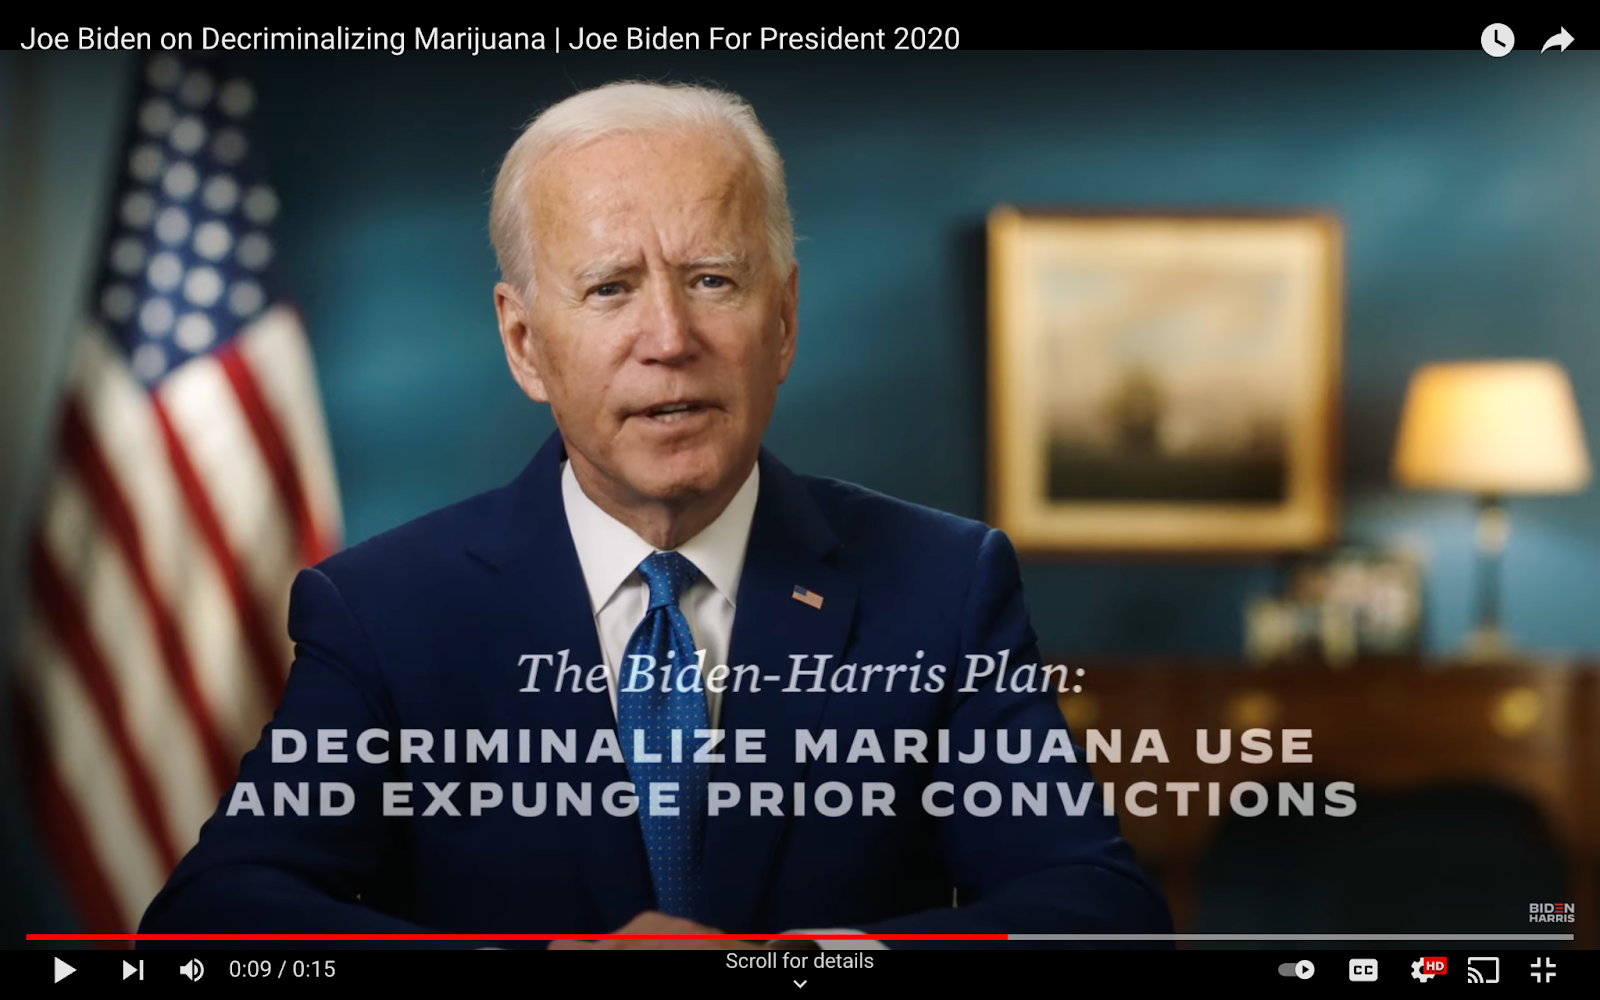 President Biden Campaign Video saying "Decriminalize Marijuana Use and Expunge Prior Convictions"